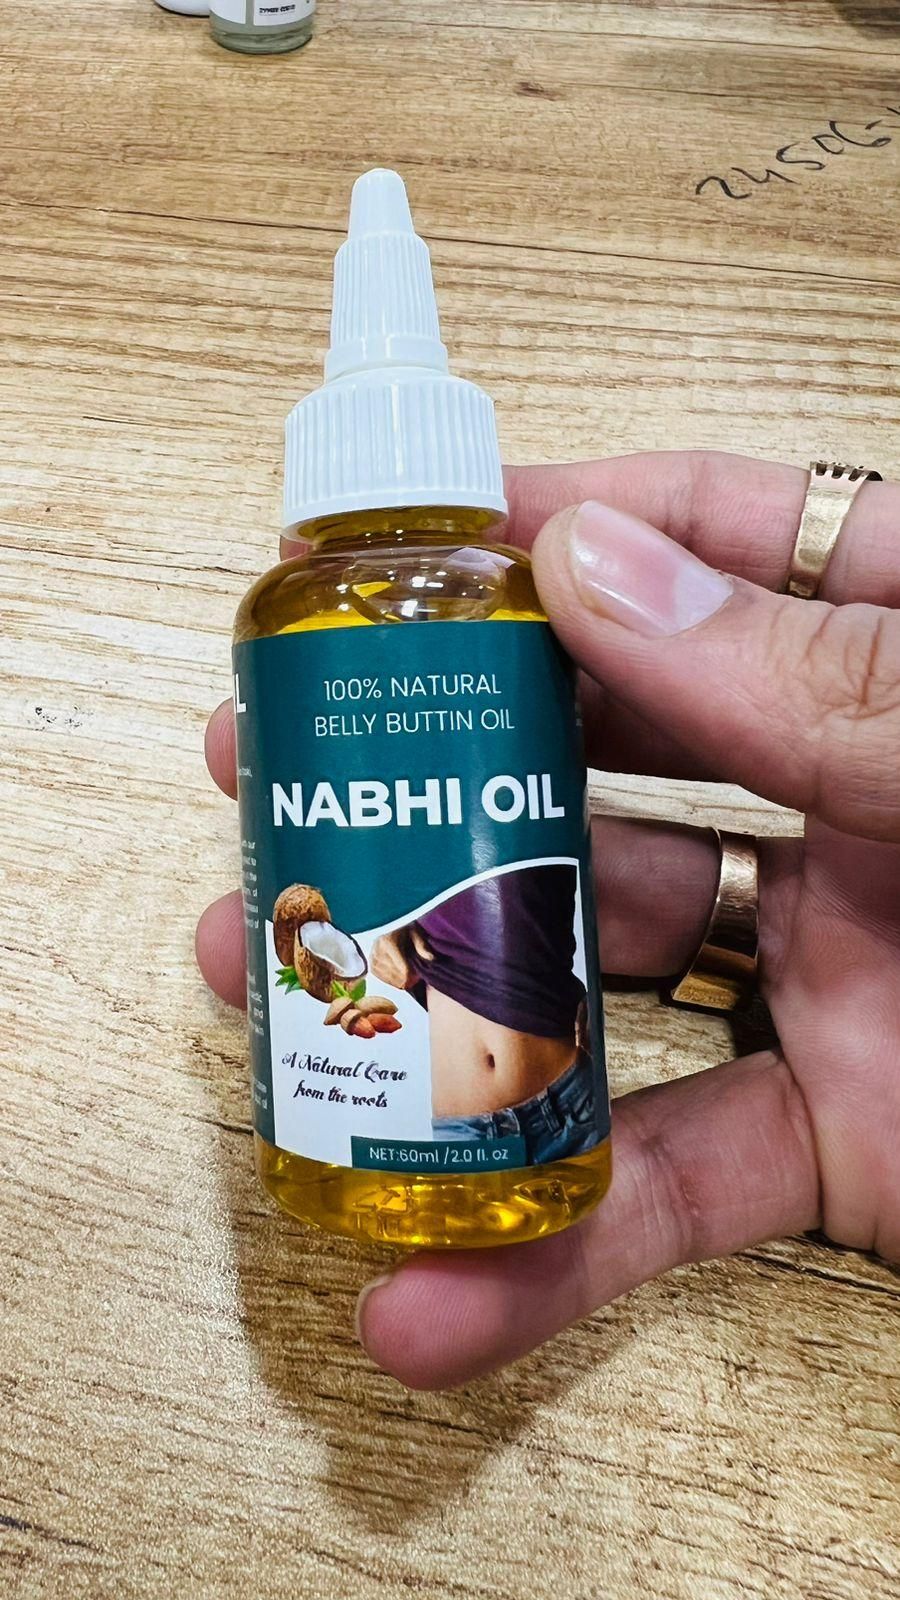 Natural Belly Buttin Oil Nabhi Oil 60ml